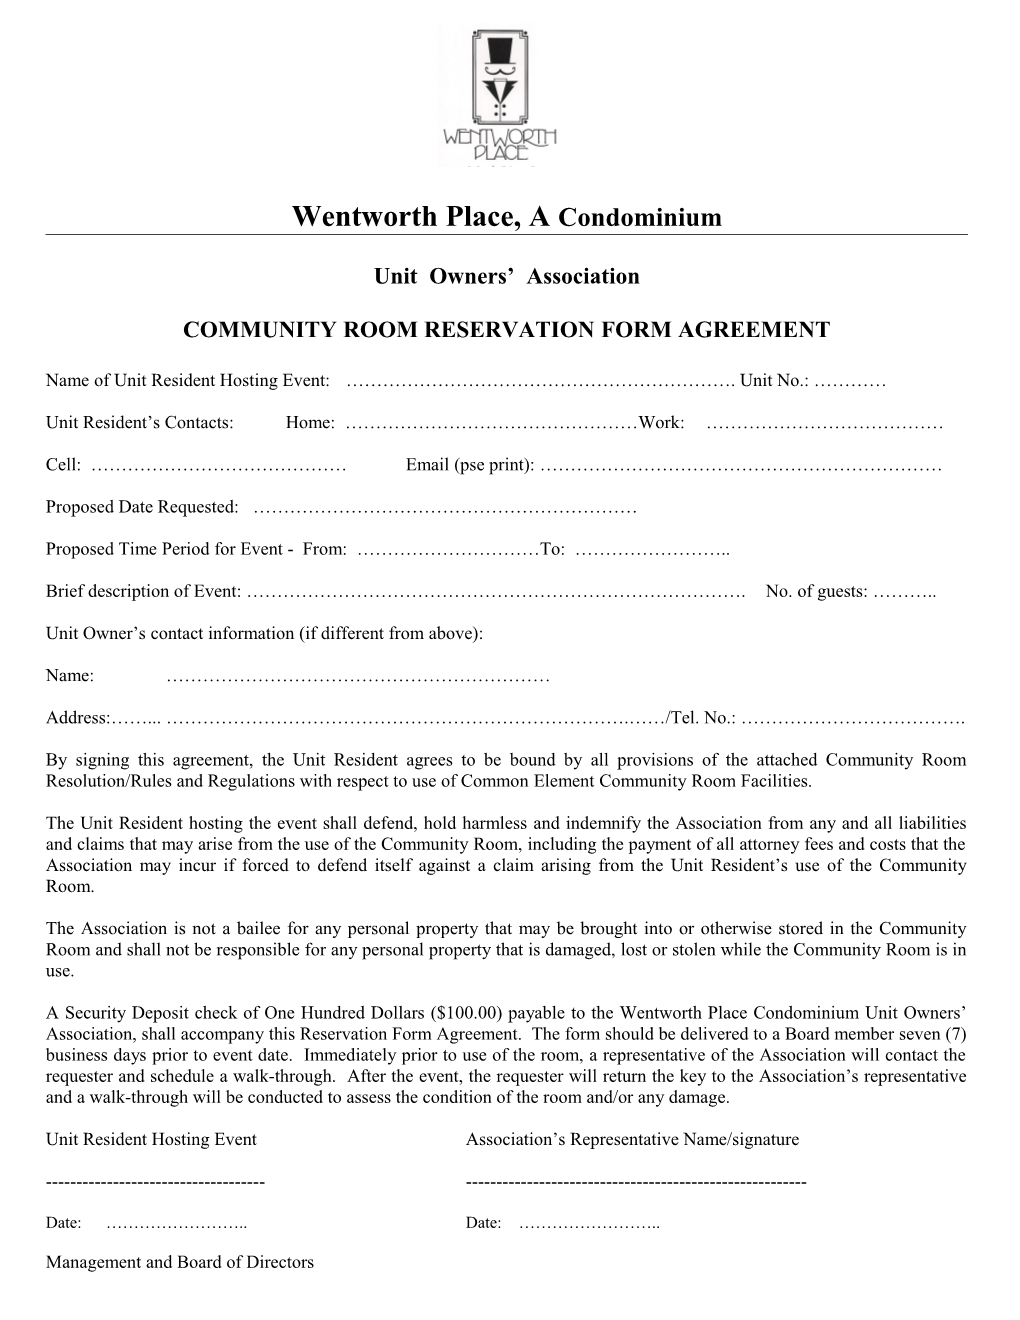 Community Room Reservation Form Agreement